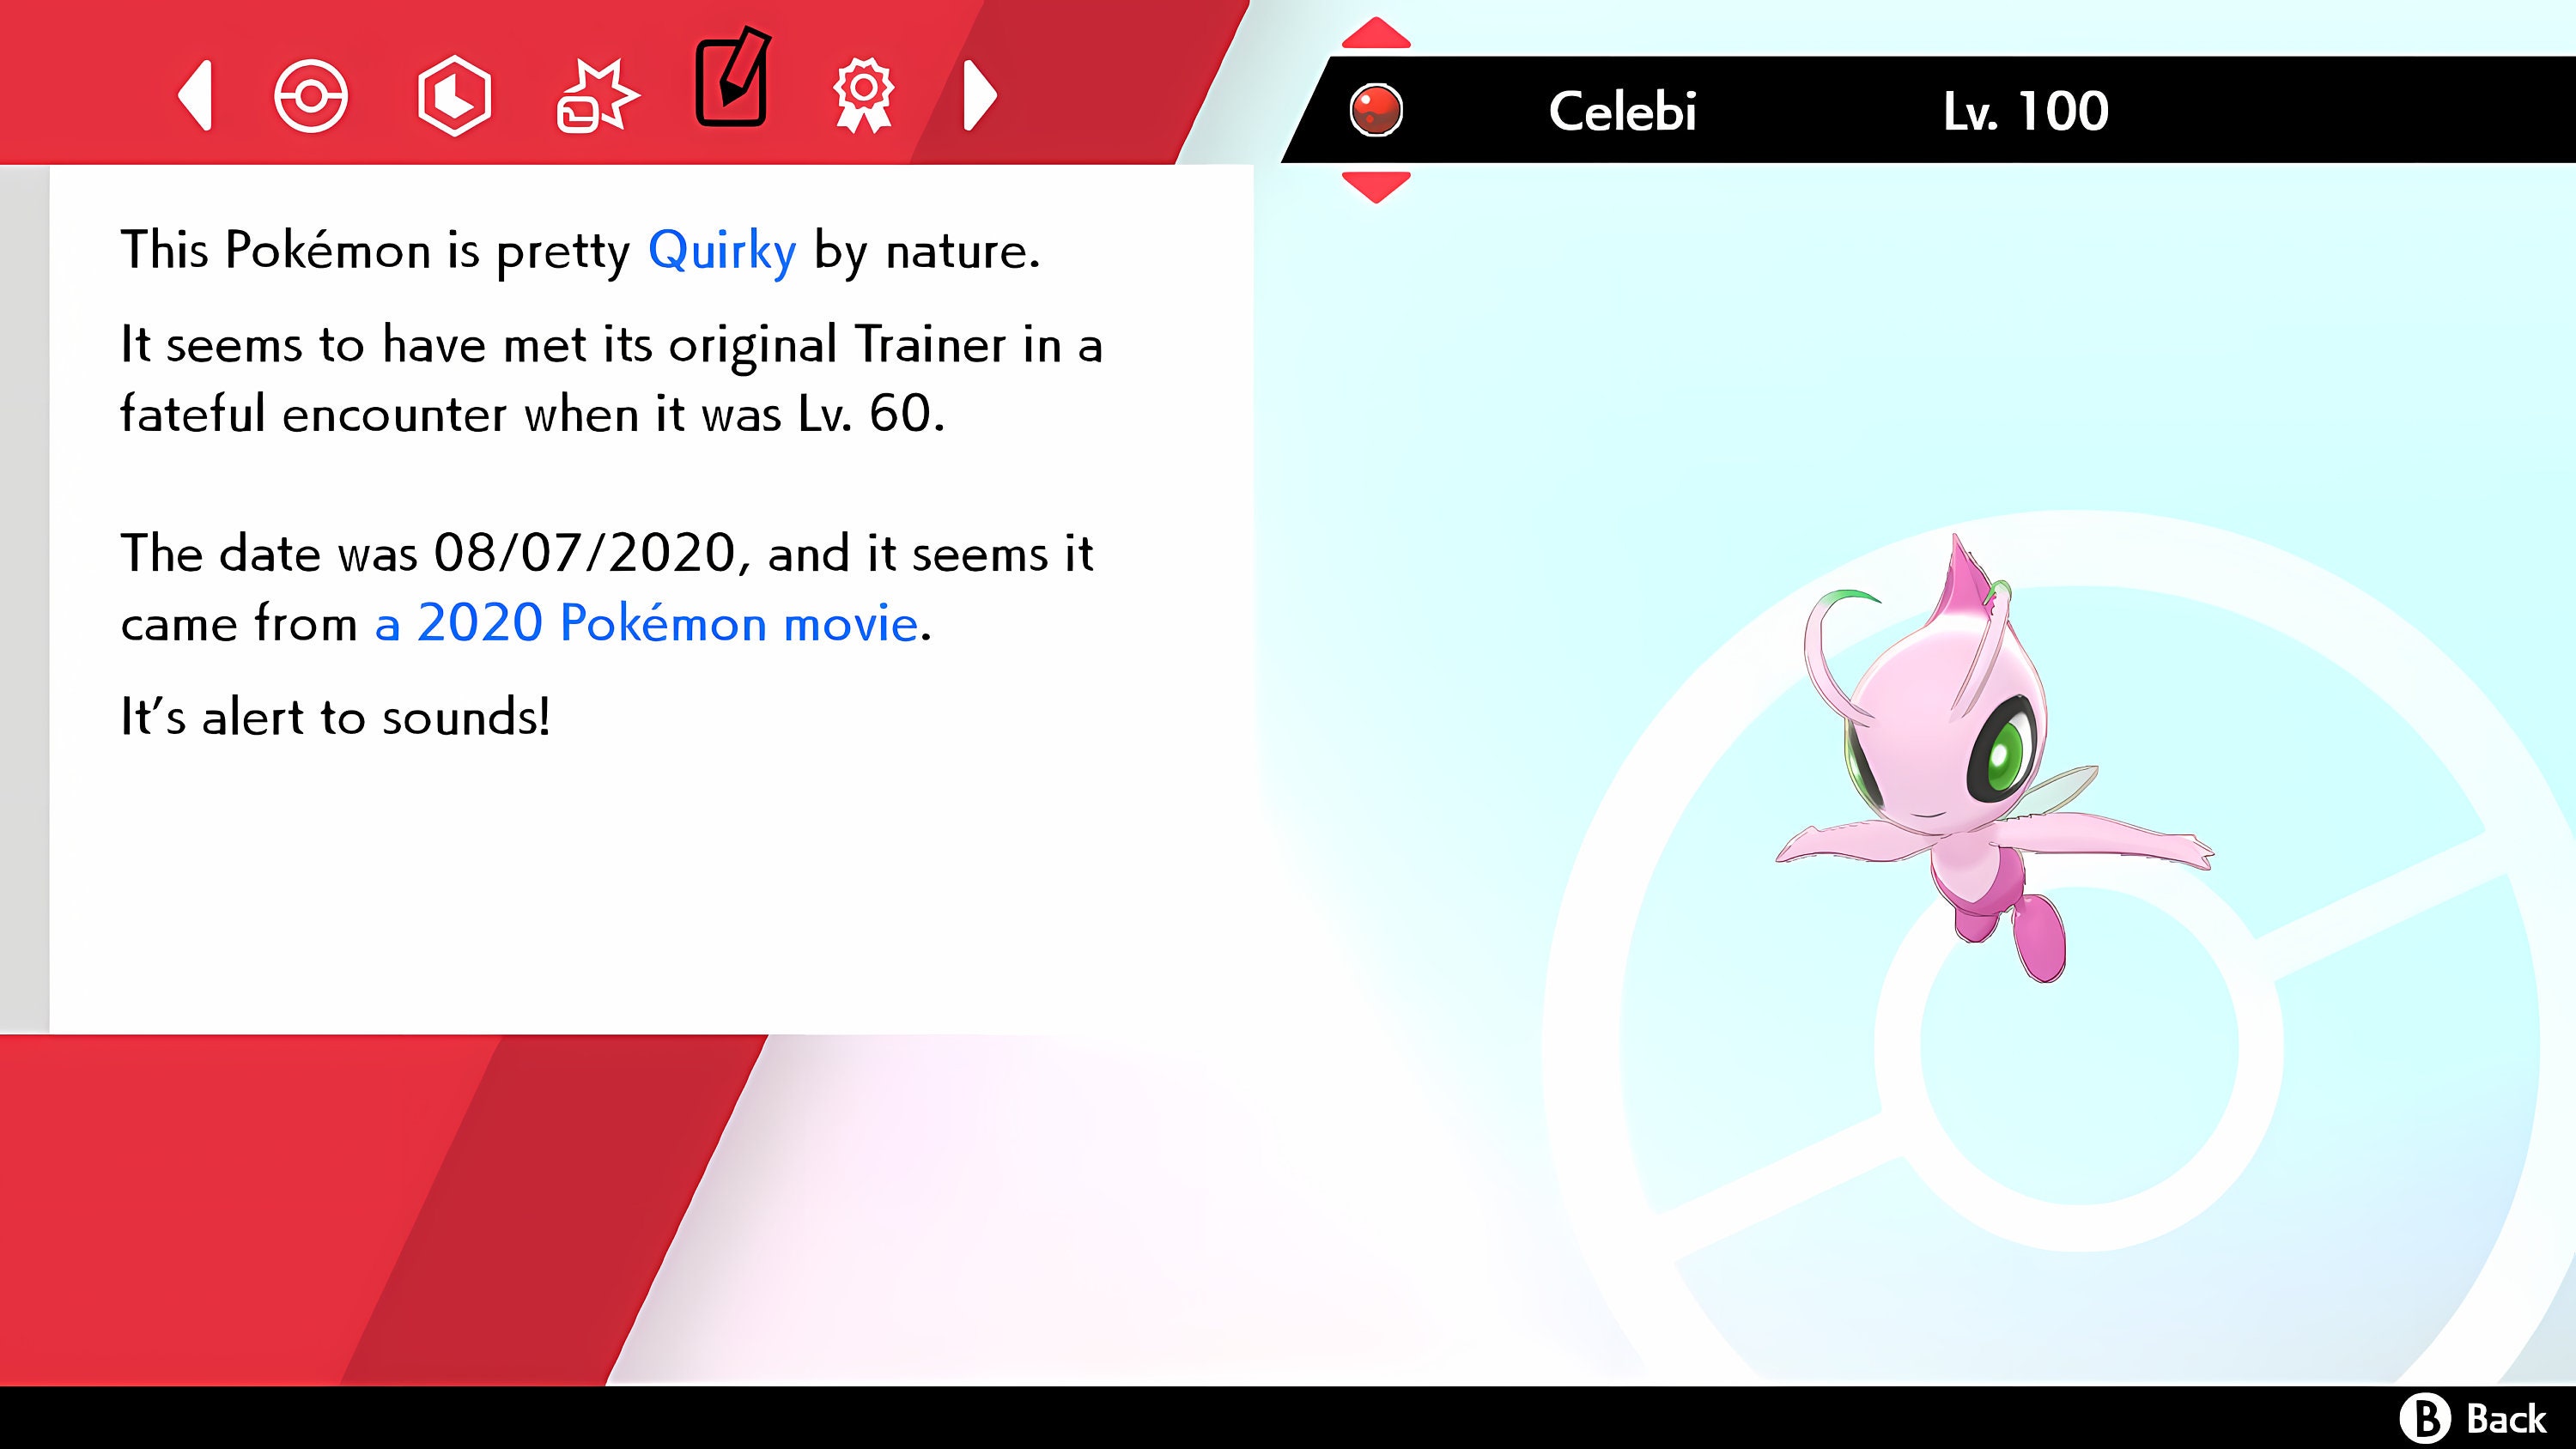 Zarude & Shiny Celebi 6IV Pokémon the Movie Coco Pokemon Sword & Shield  TRADING